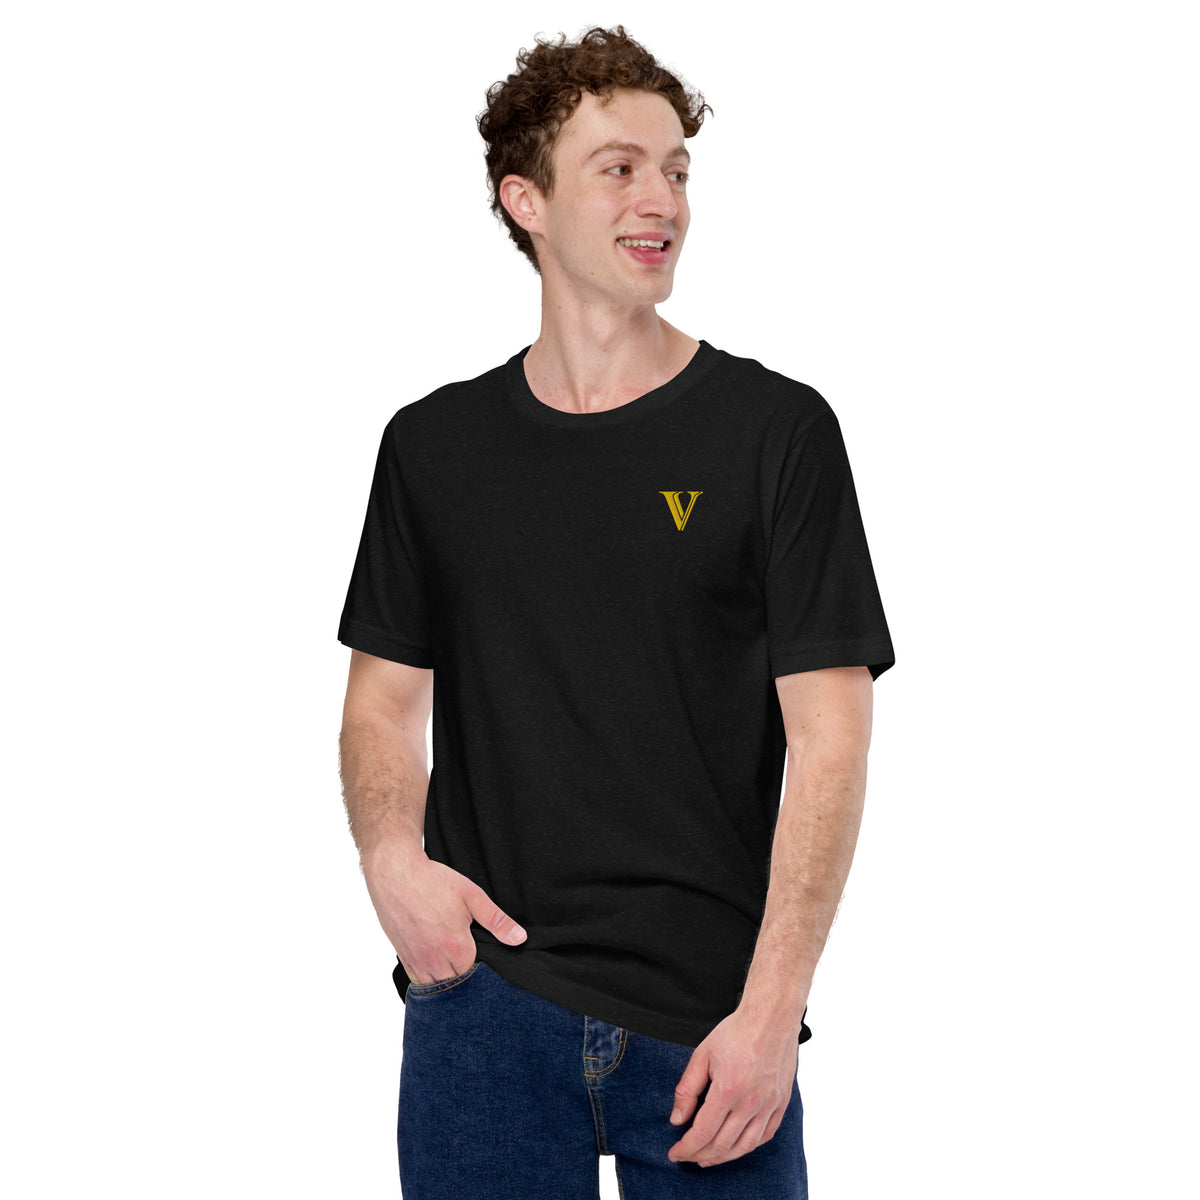 VV Embroidered T-Shirt (Black/Gold)